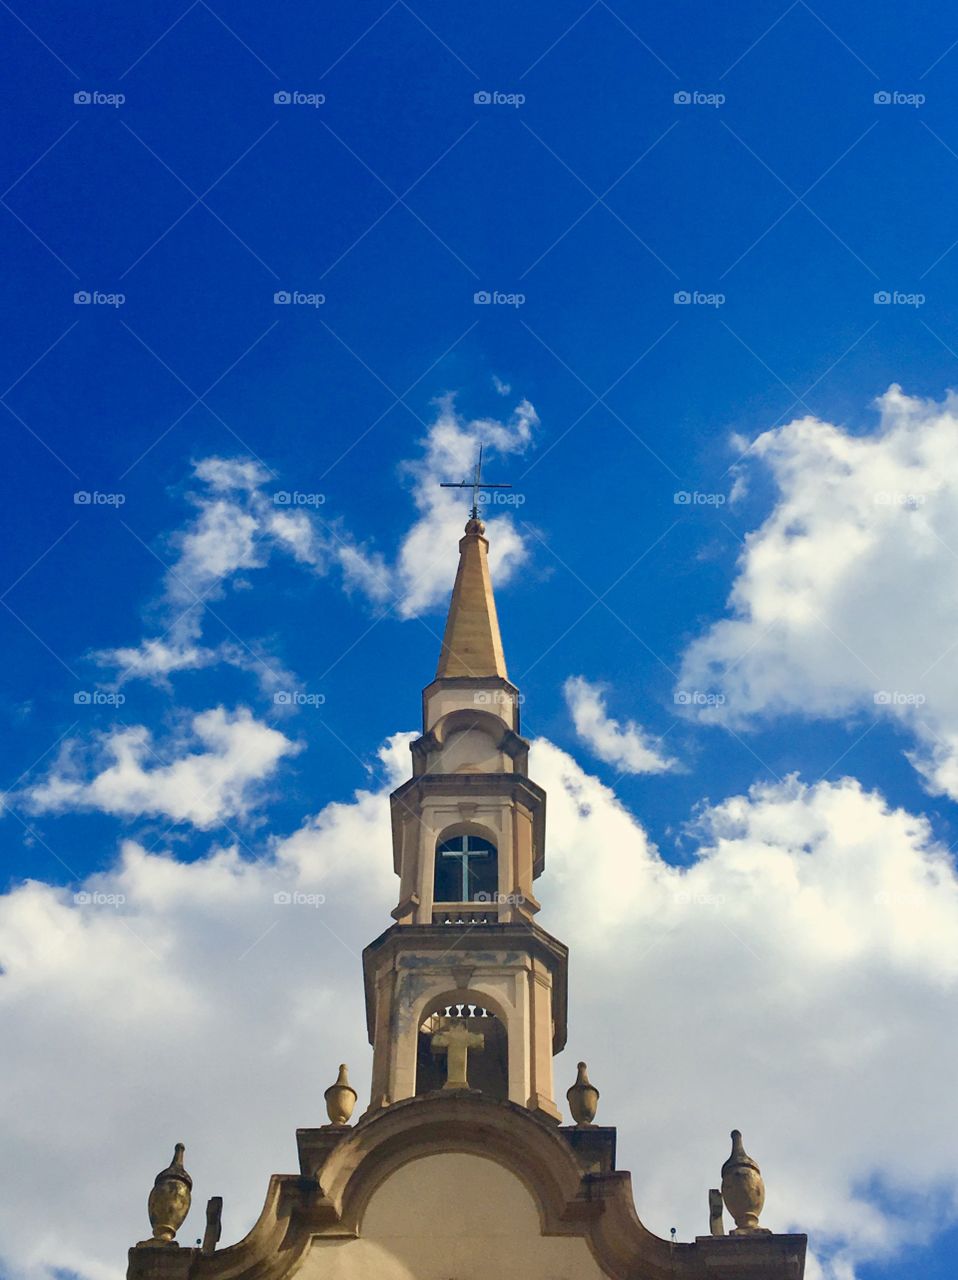 church - Square of Liberty - Sao Paulo - Brazil